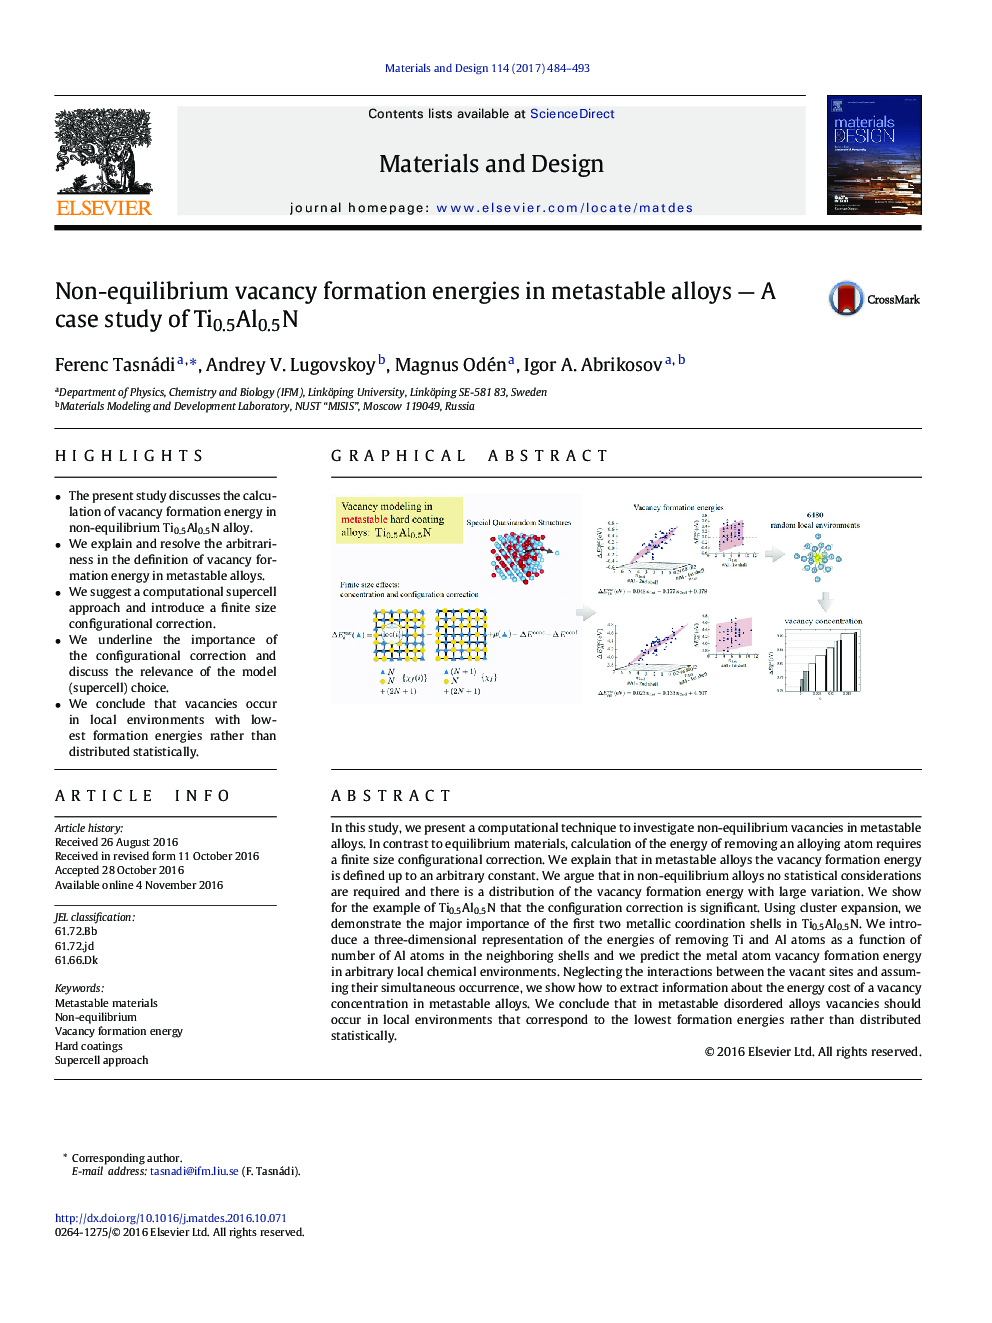 Non-equilibrium vacancy formation energies in metastable alloys - A case study ofÂ Ti0.5Al0.5N